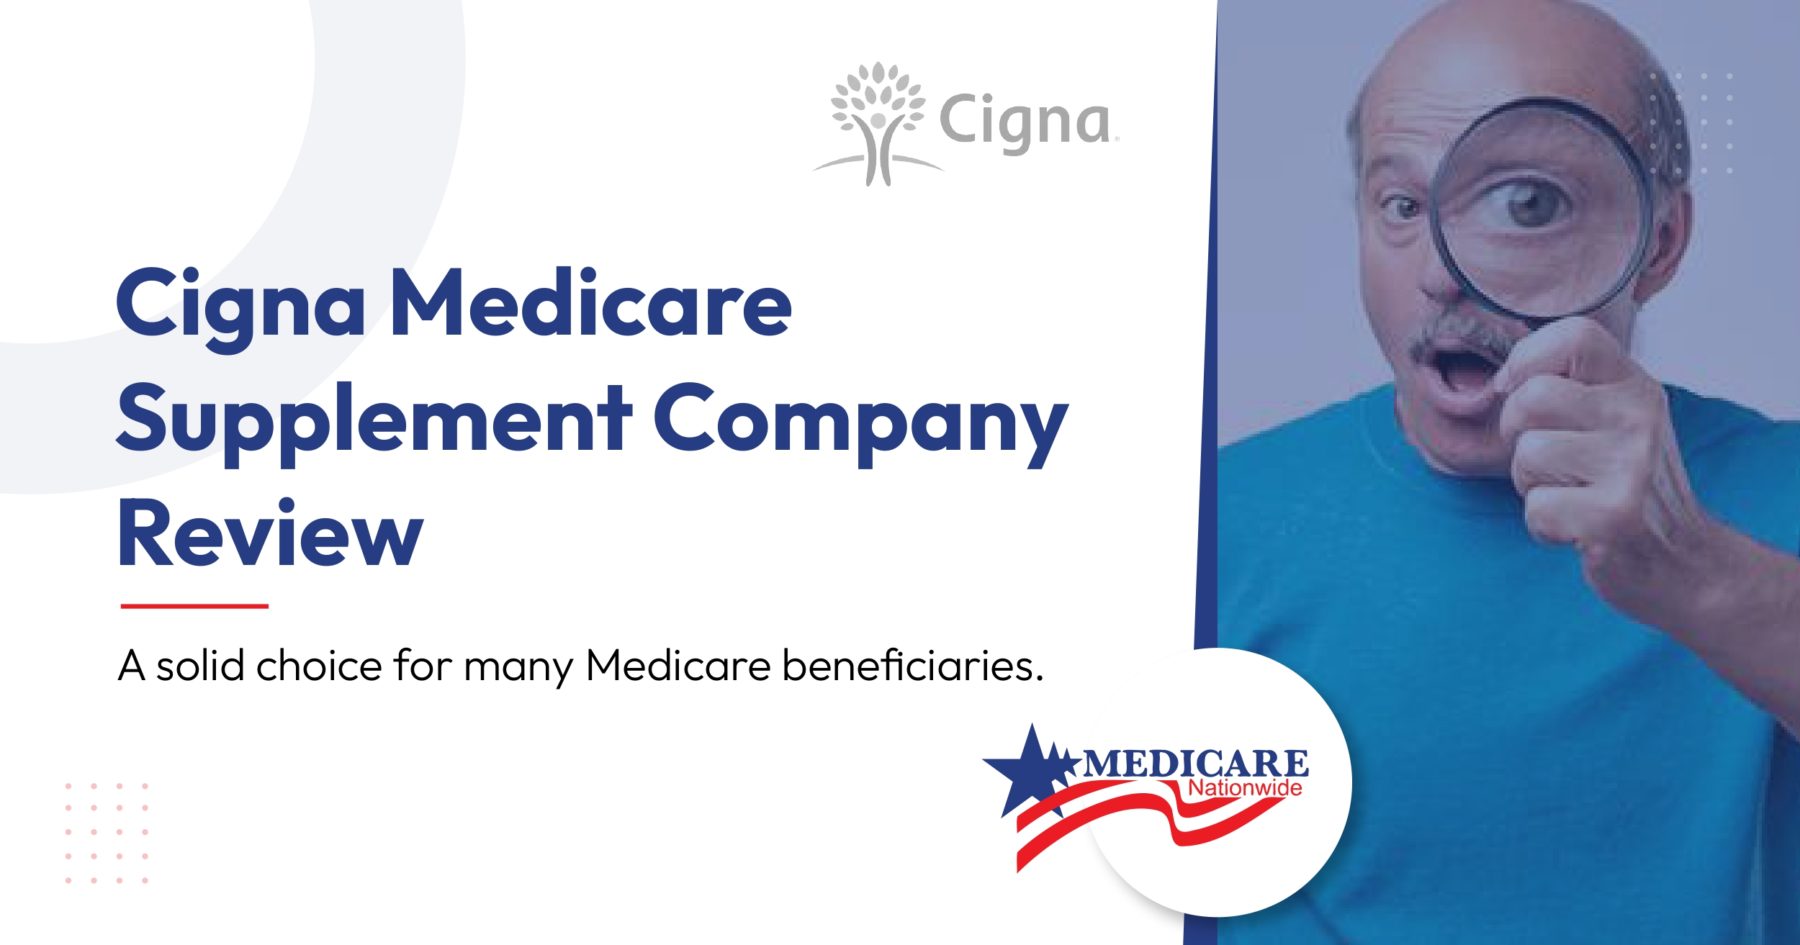 Cigna Medicare Supplement Company Review